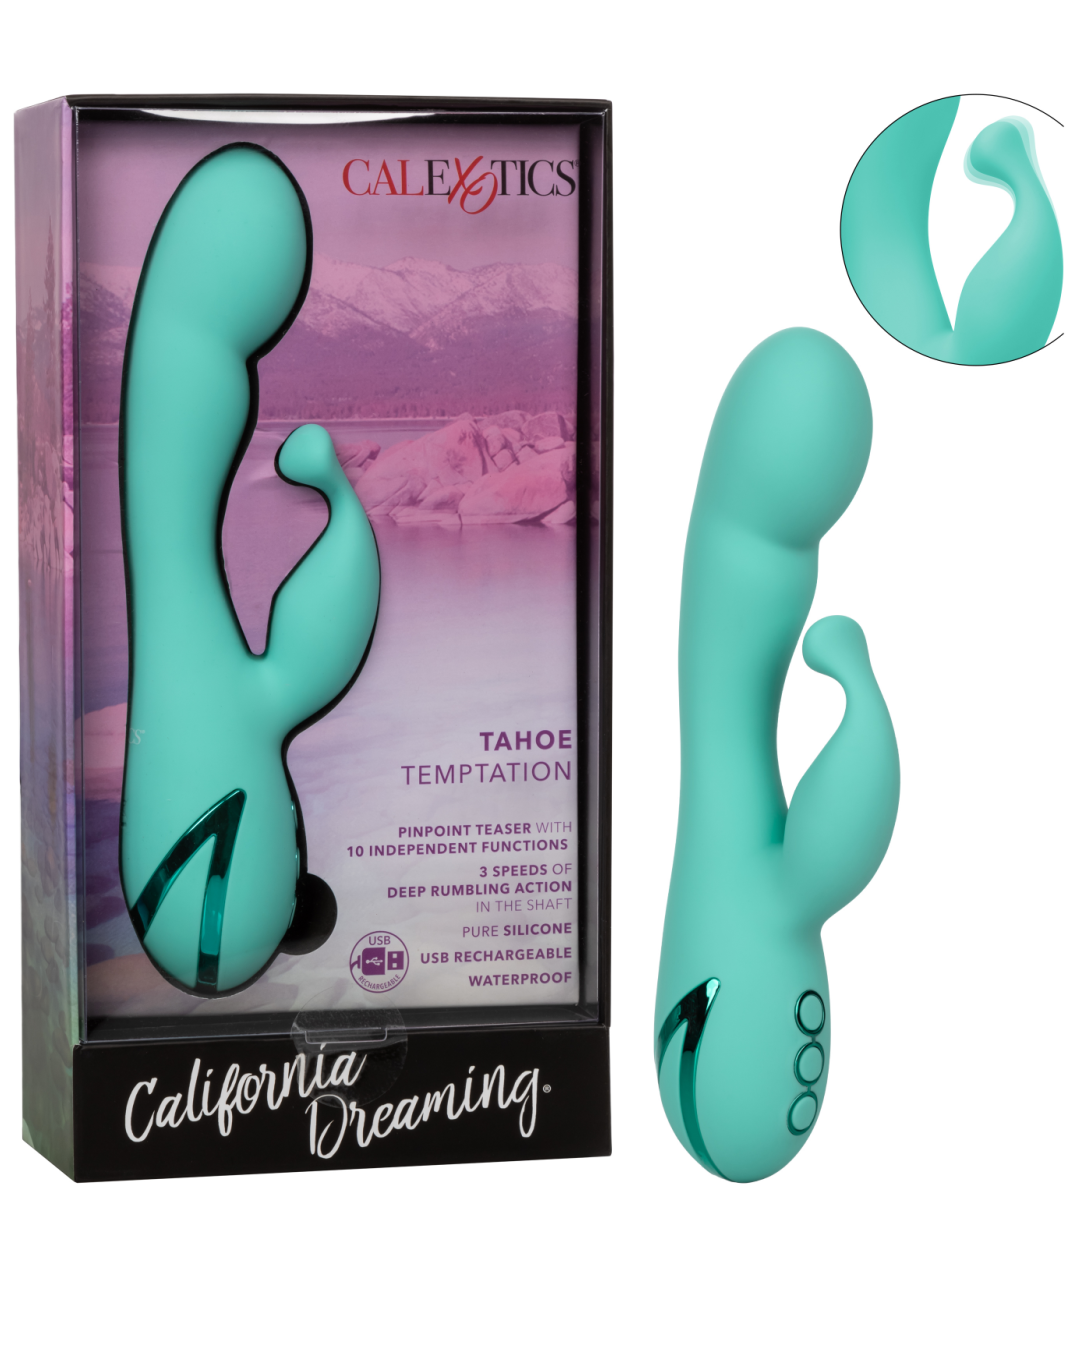 California Dreaming Tahoe Temptation Vibrator product and box 